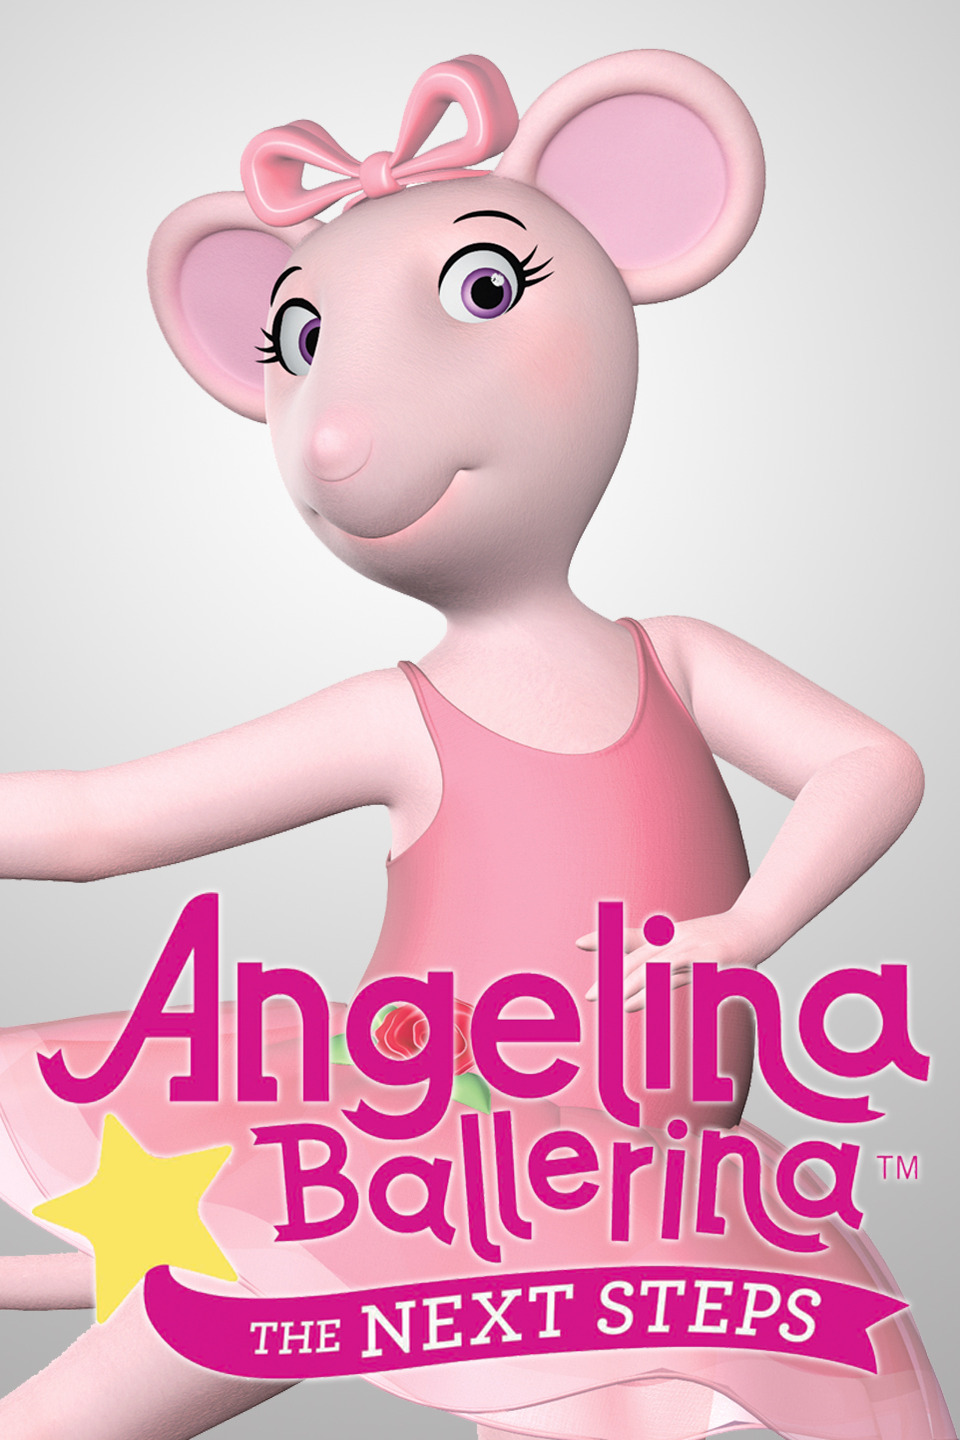 Angelina Ballerina The Next Steps Soundeffects Wiki Fandom Powered By Wikia 